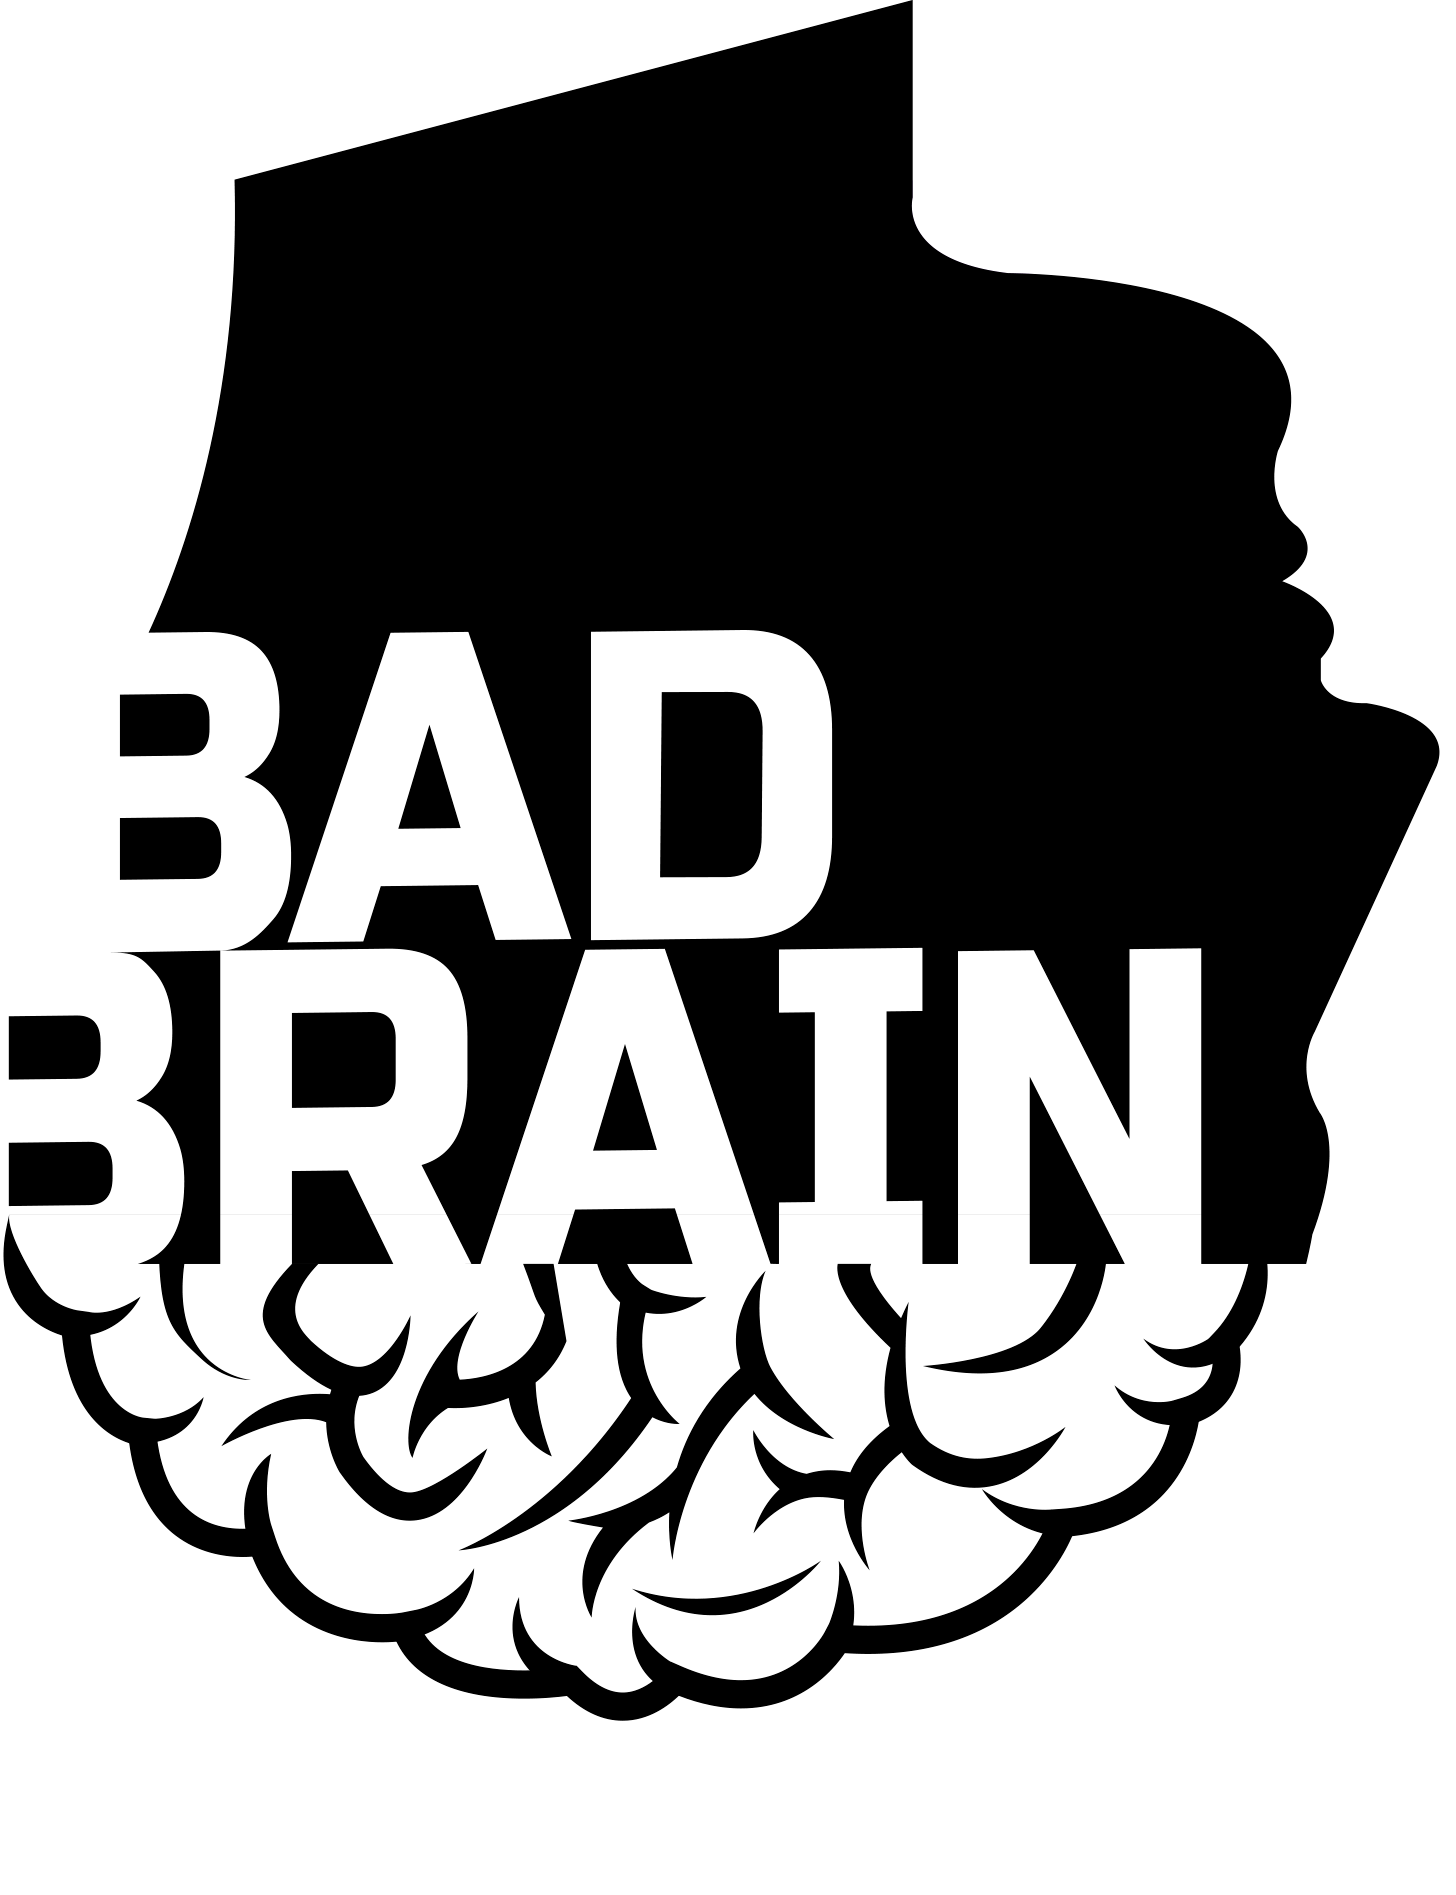 Bad Brain Digital Consulting